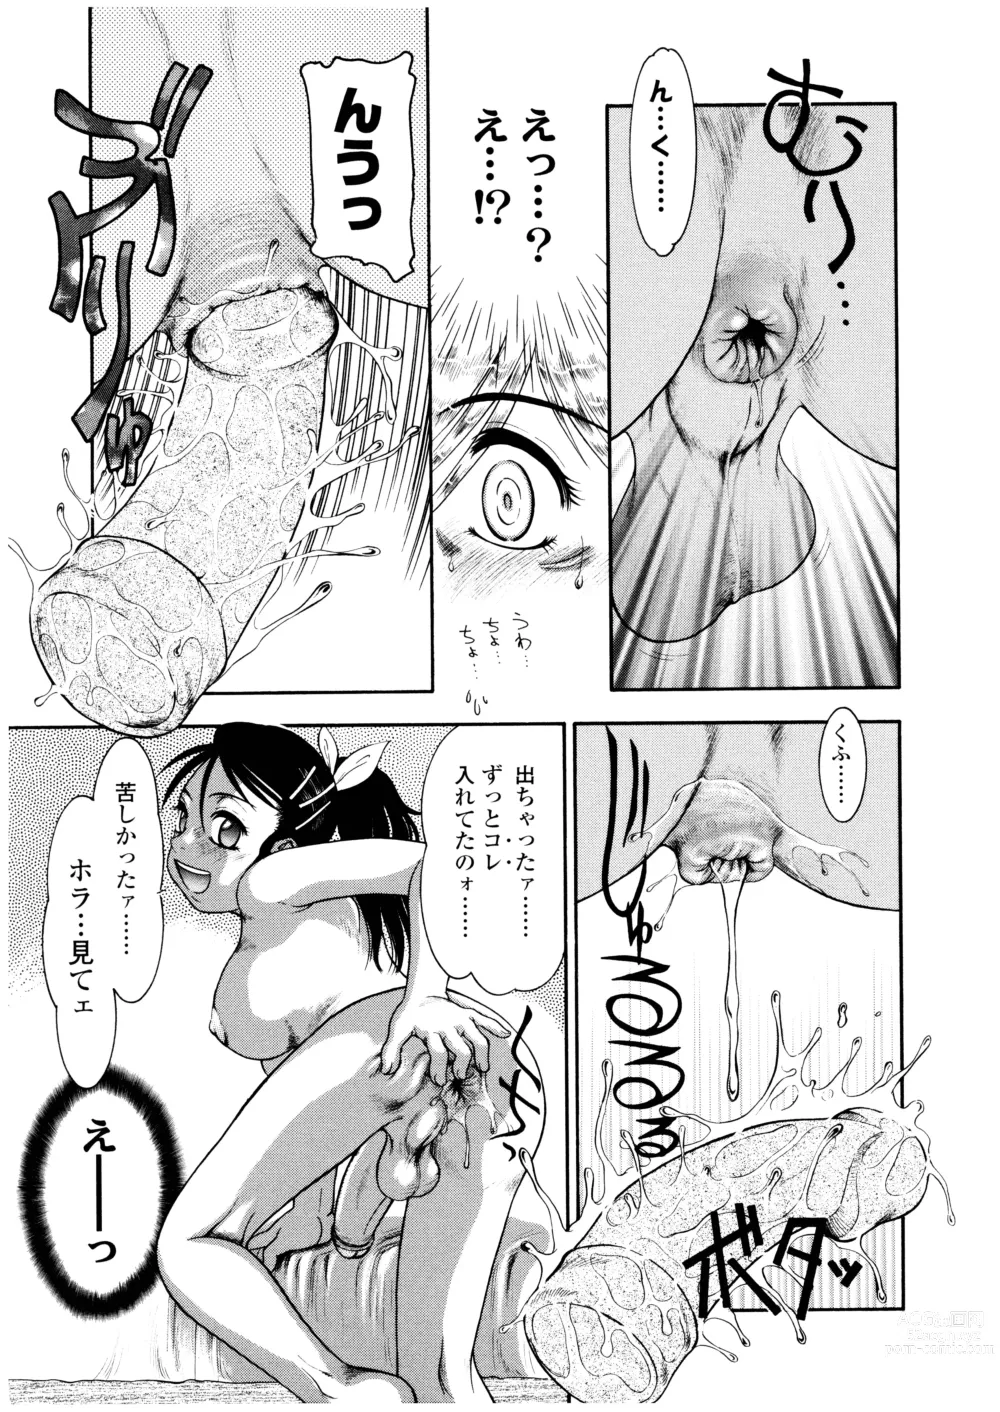 Page 174 of manga Futanari Ism